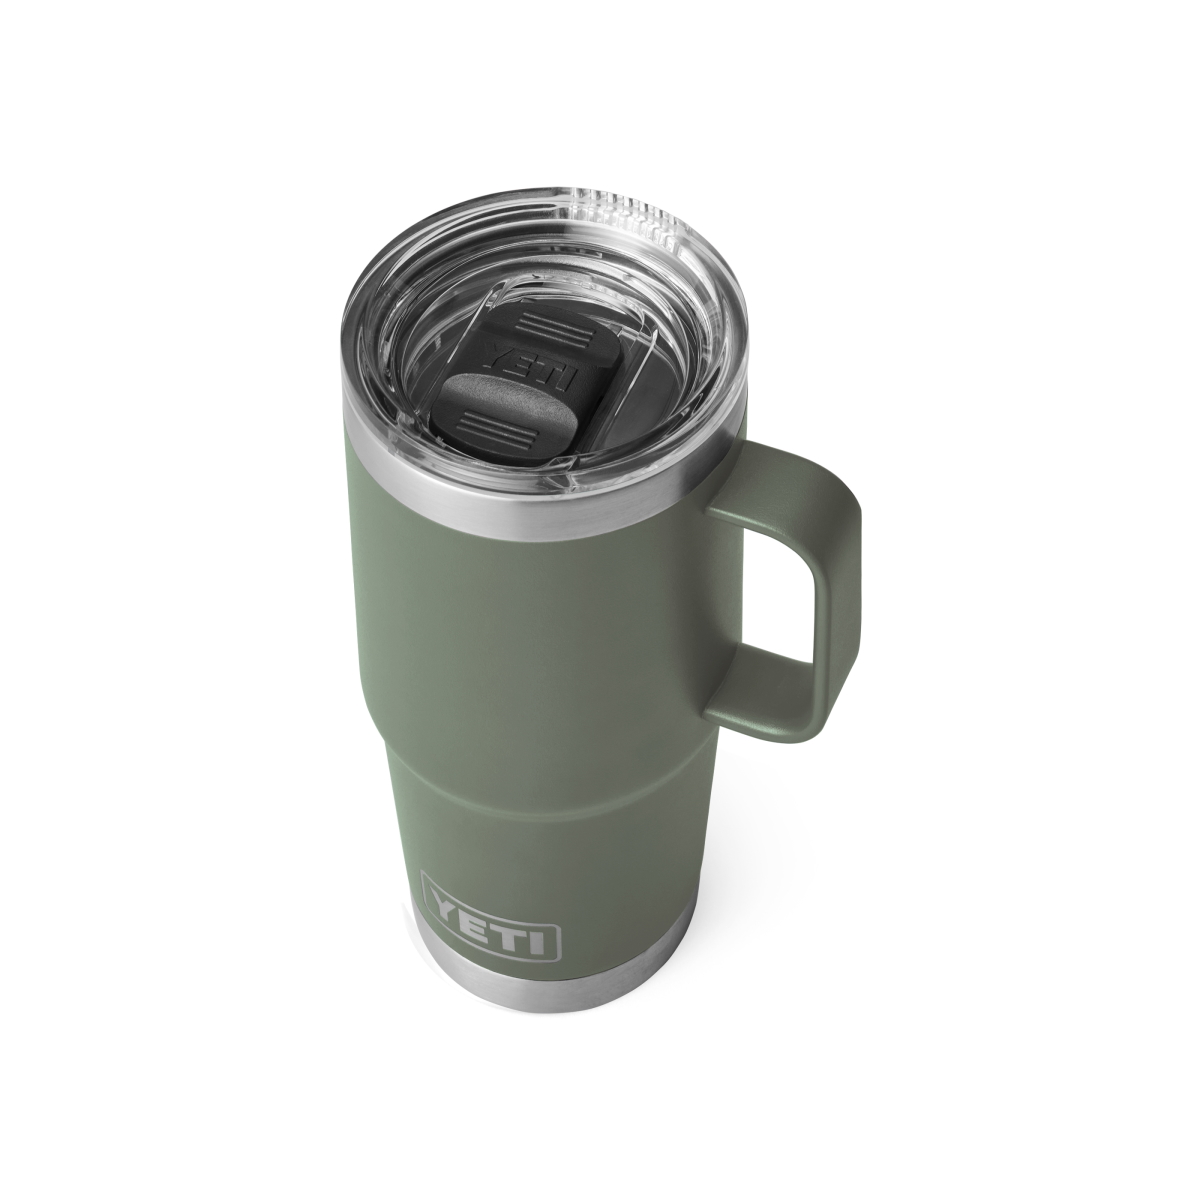 YETI - Rambler 20 oz Travel Mug – Wildrose Trading Co.